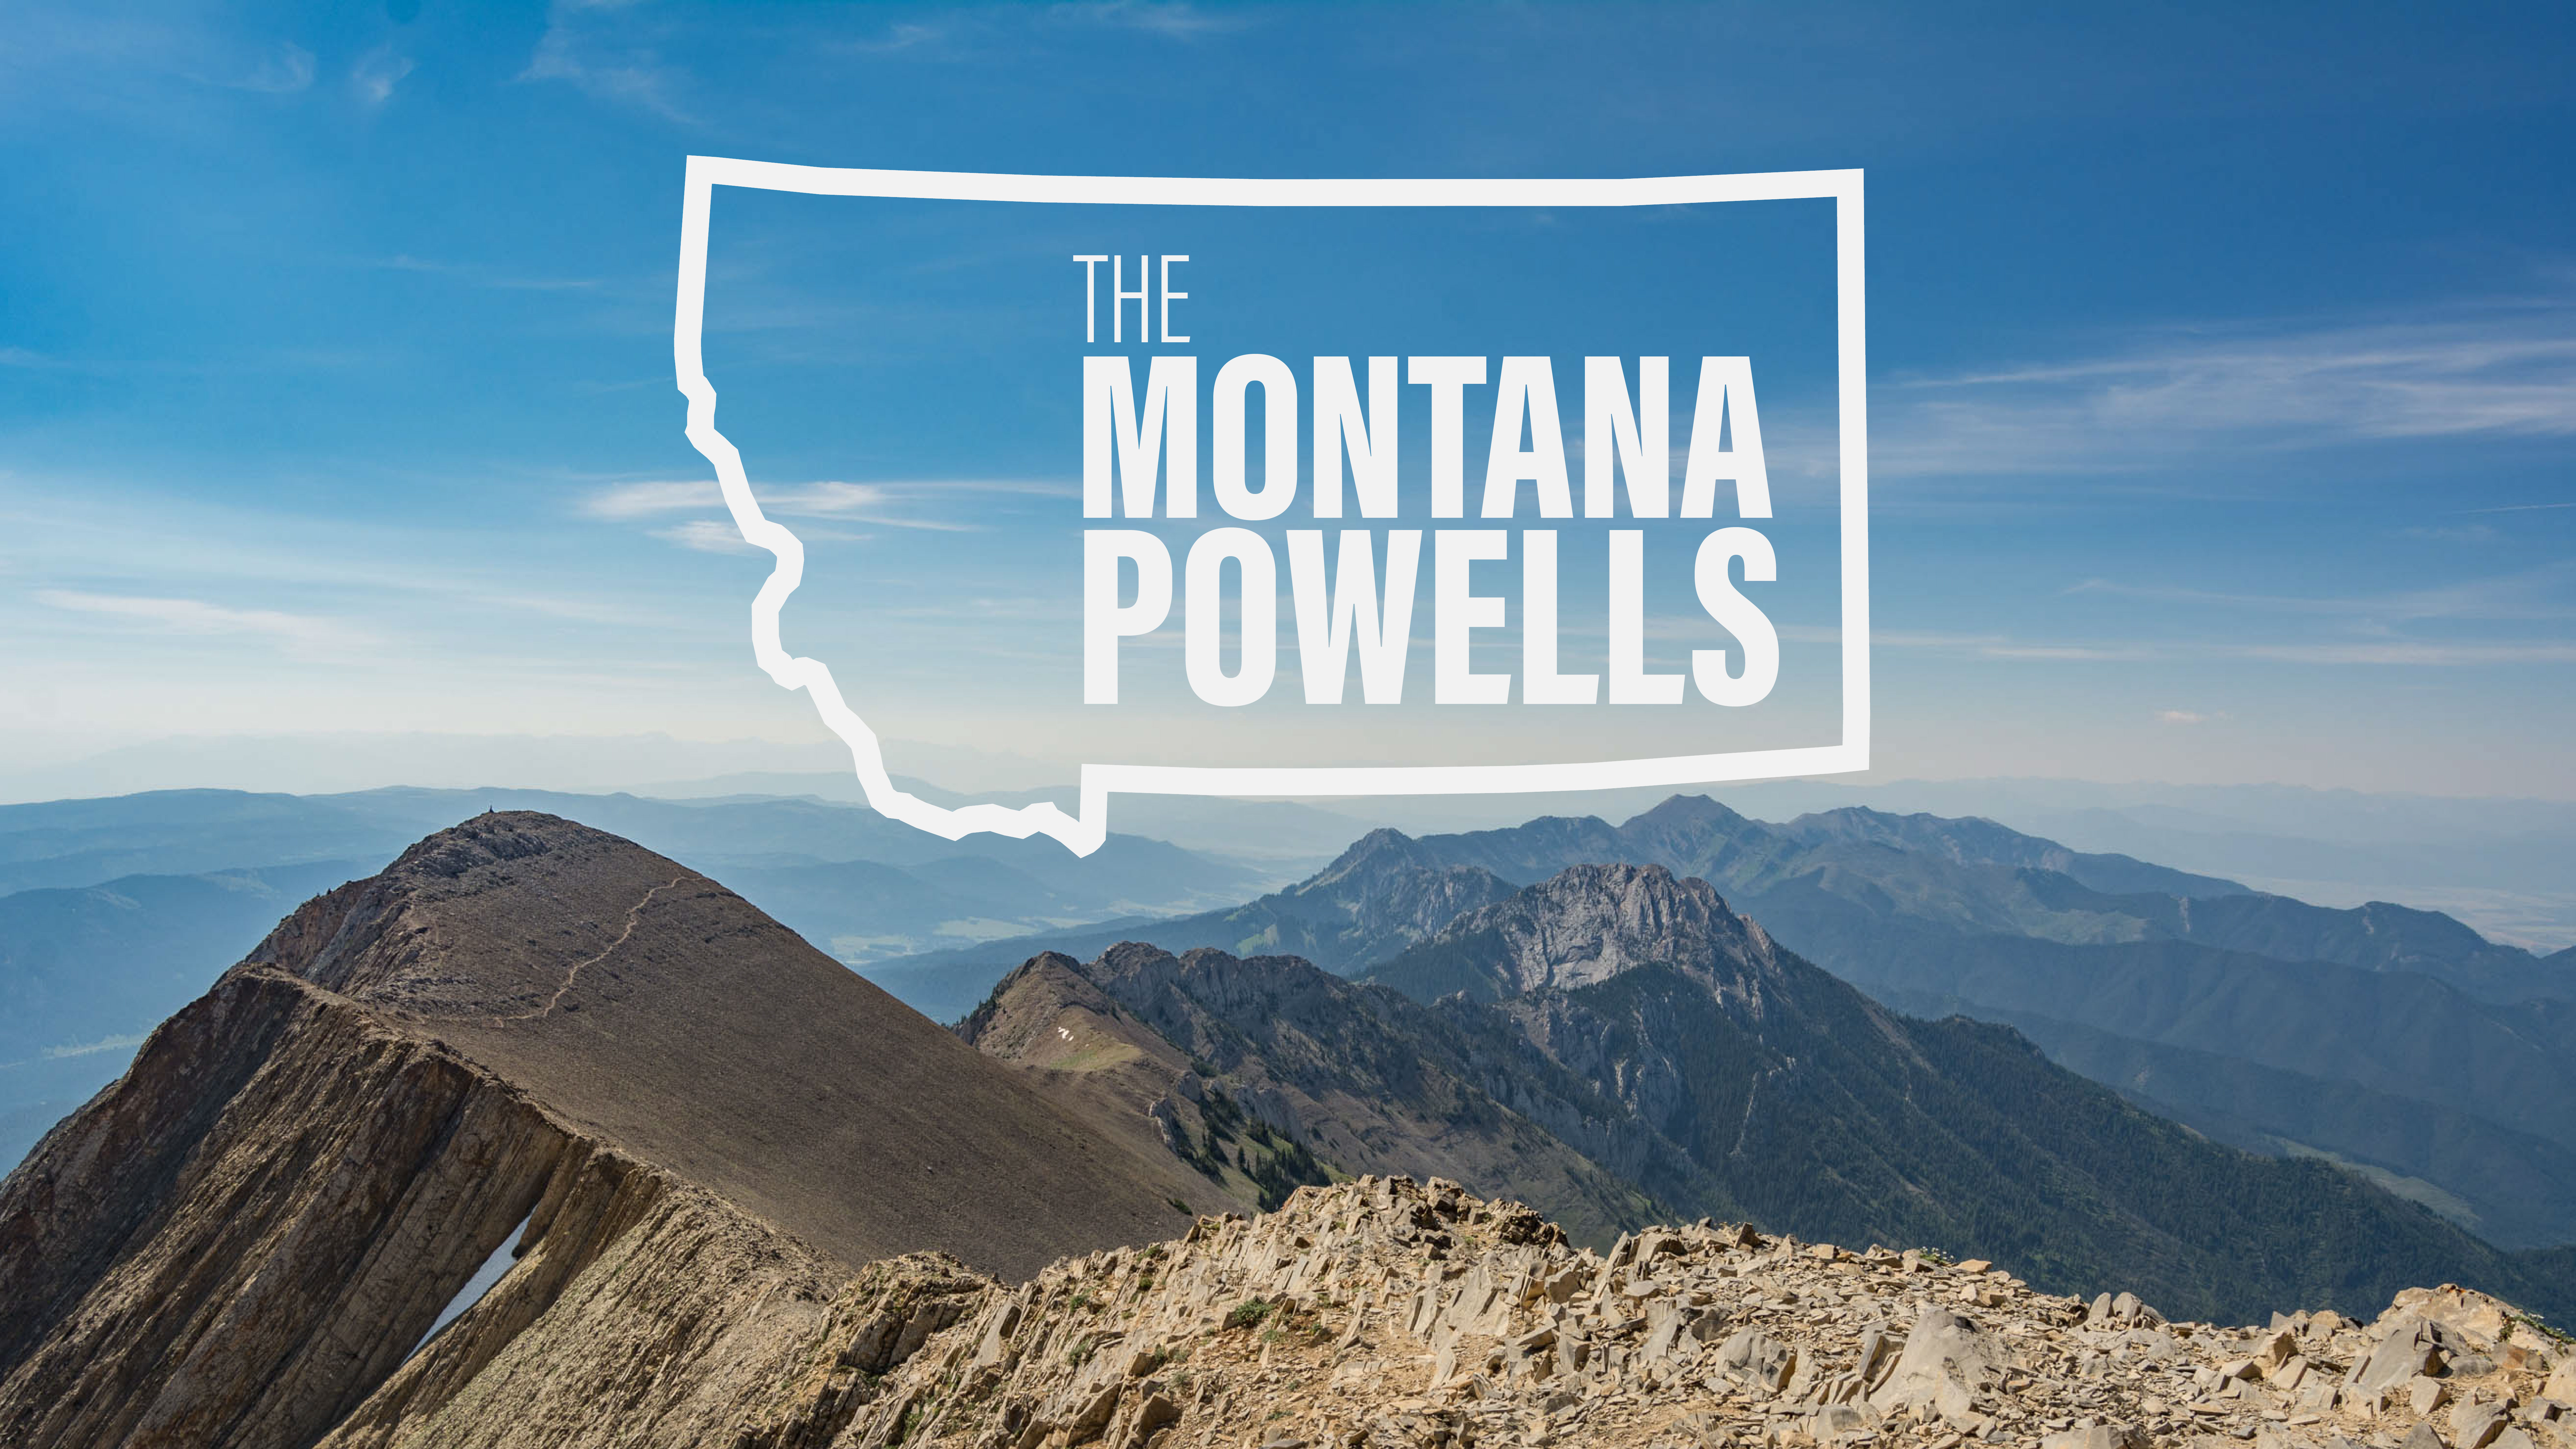 The ‘Montana Powells’